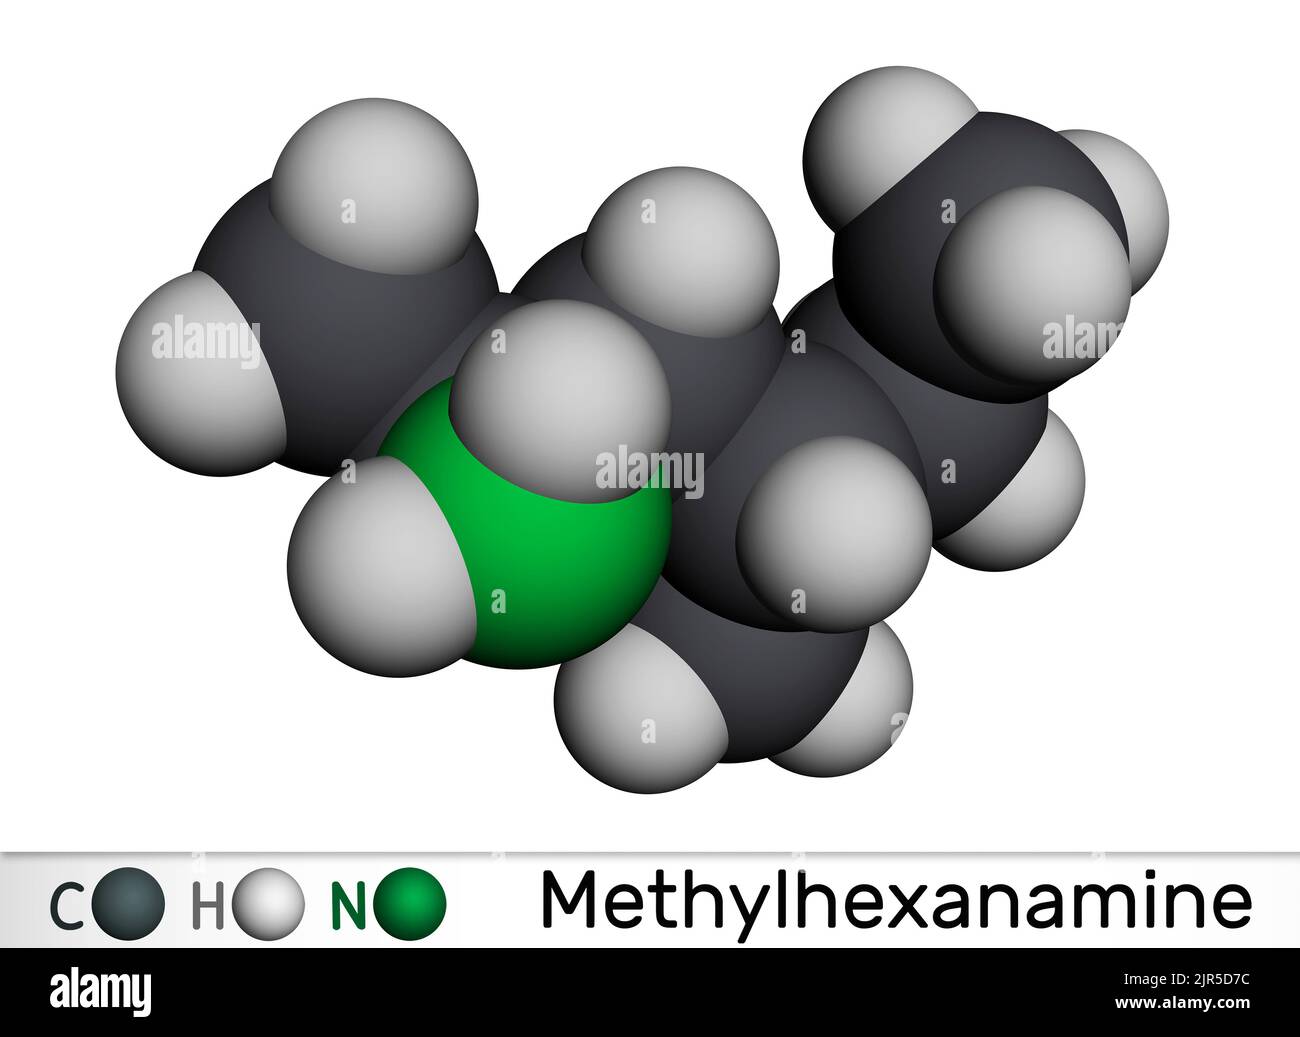 Methylhexanamine, methylhexamine, dimethylamylamine, DMAA molecule. It is alkylamine, indirect sympathomimetic drug. Molecular model. 3D rendering. Il Stock Photo